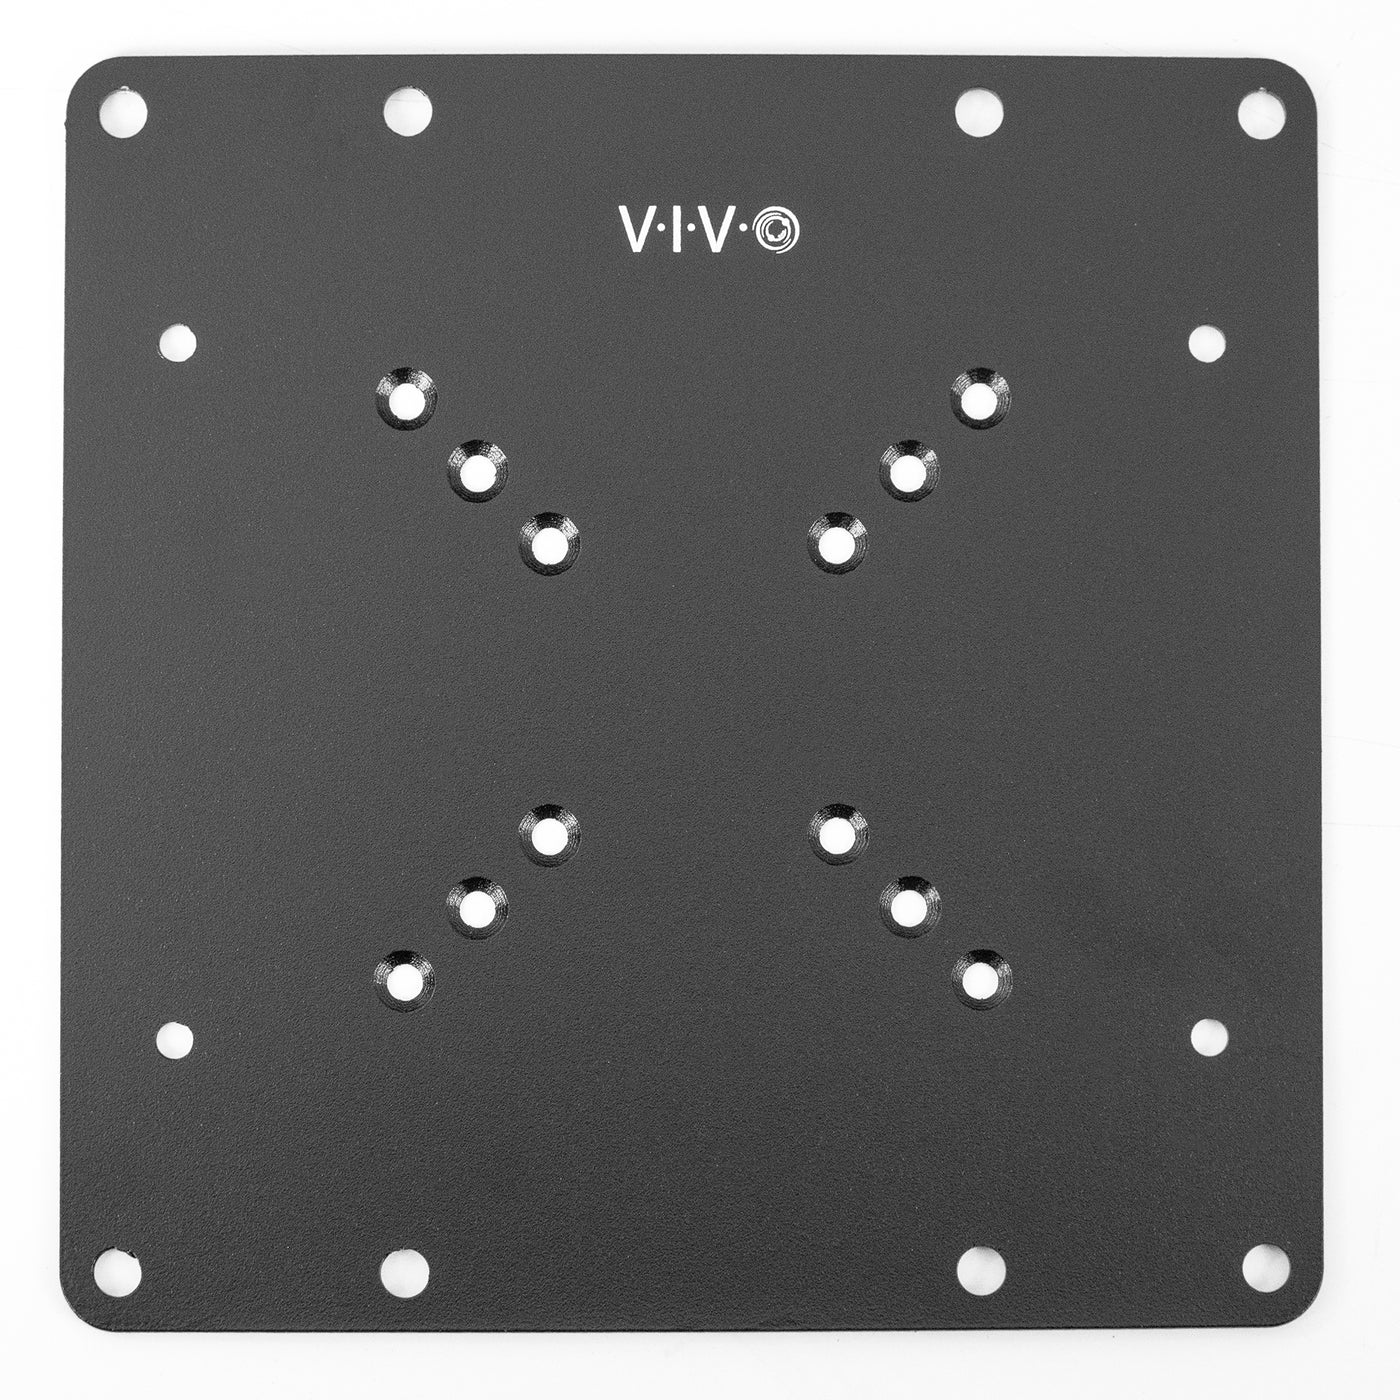 VESA 300x300 standard with adapter plate